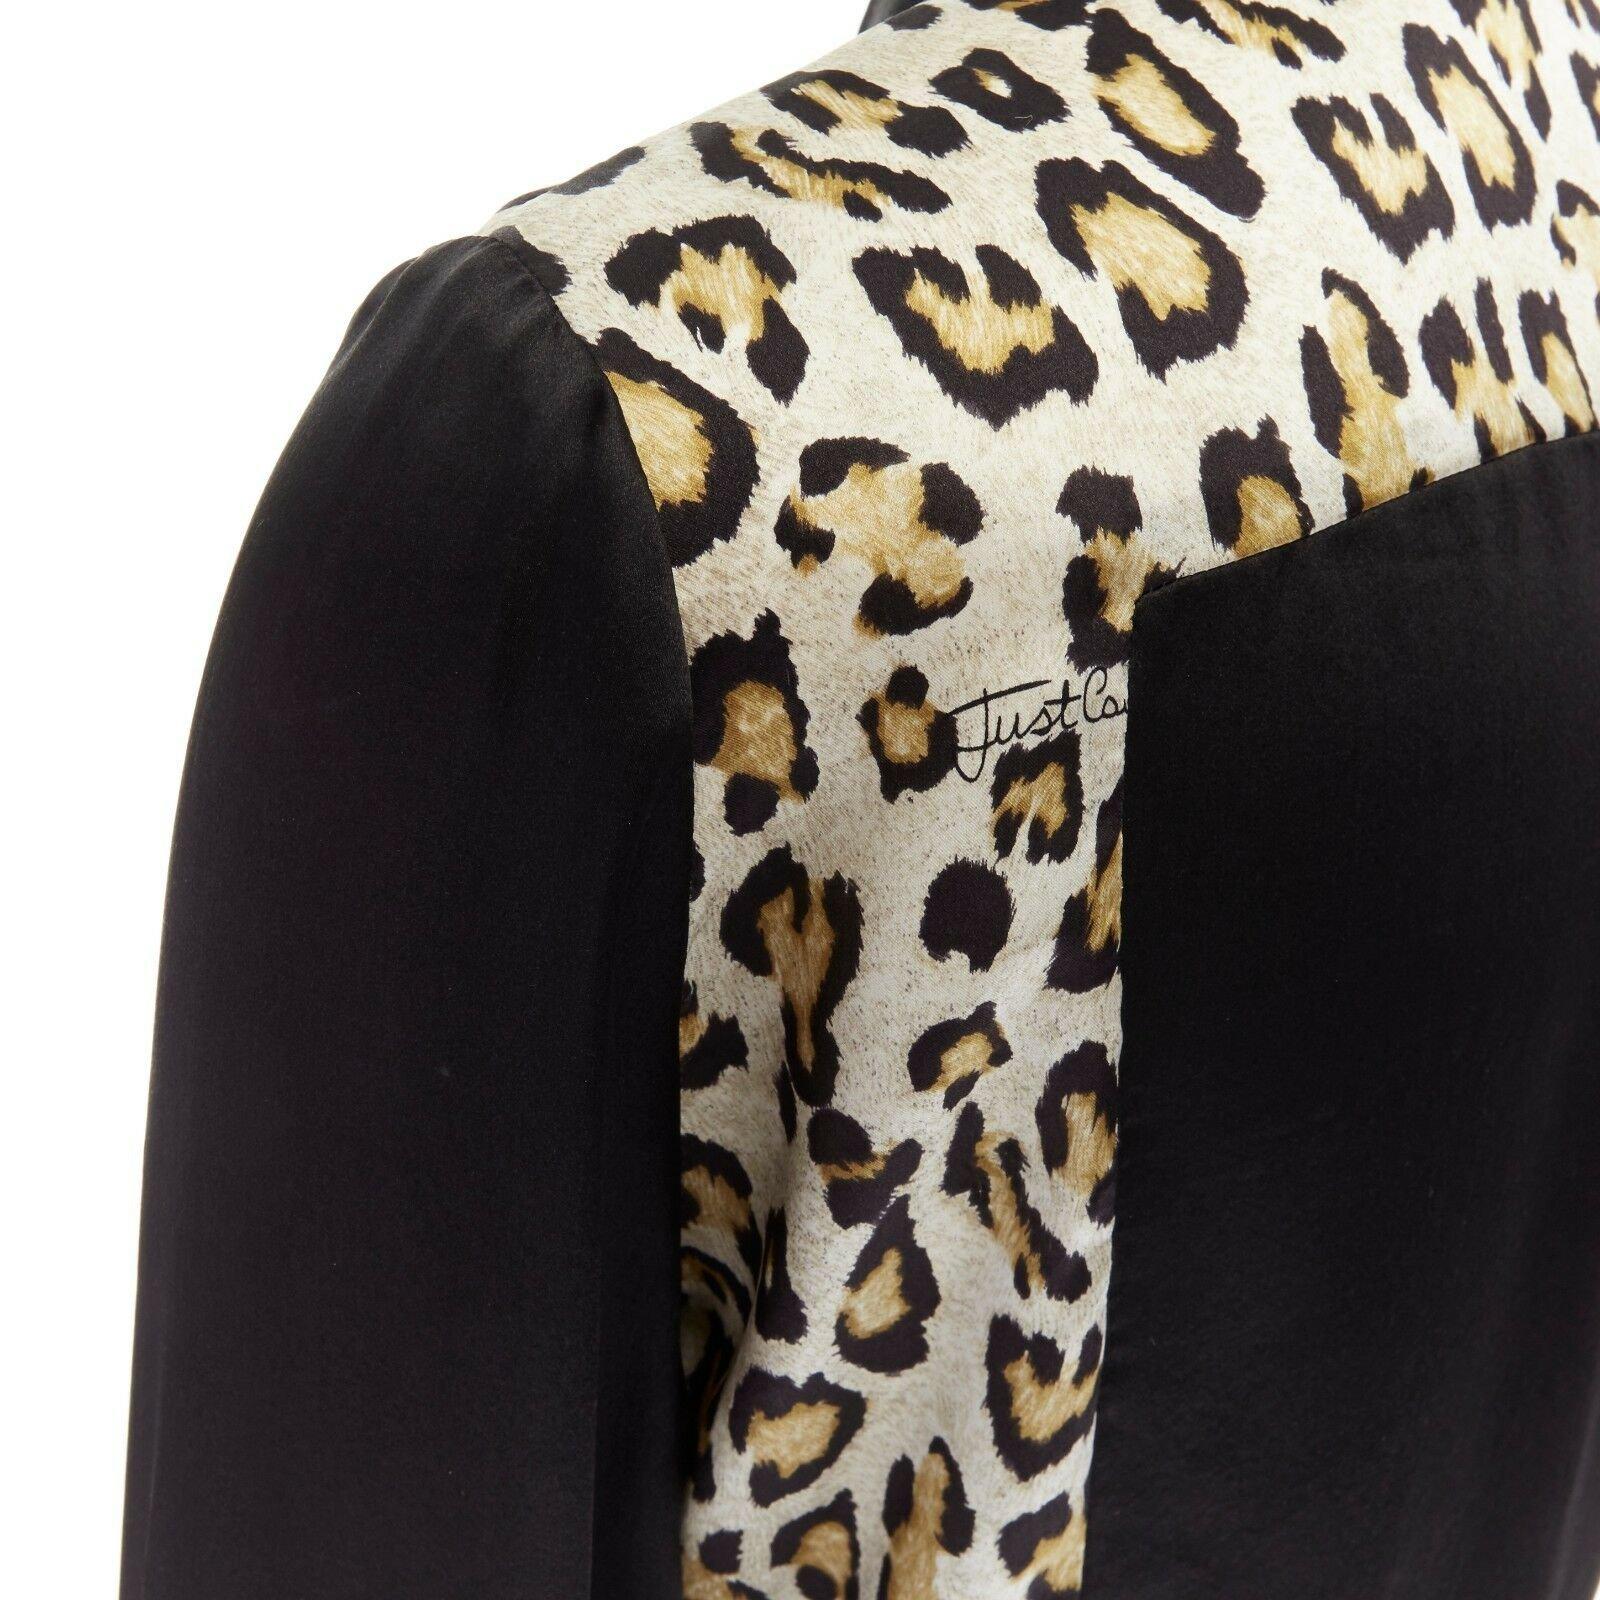 JUST CAVALLI 100% silk black leopard colorblocked button front shirt IT40 S For Sale 2